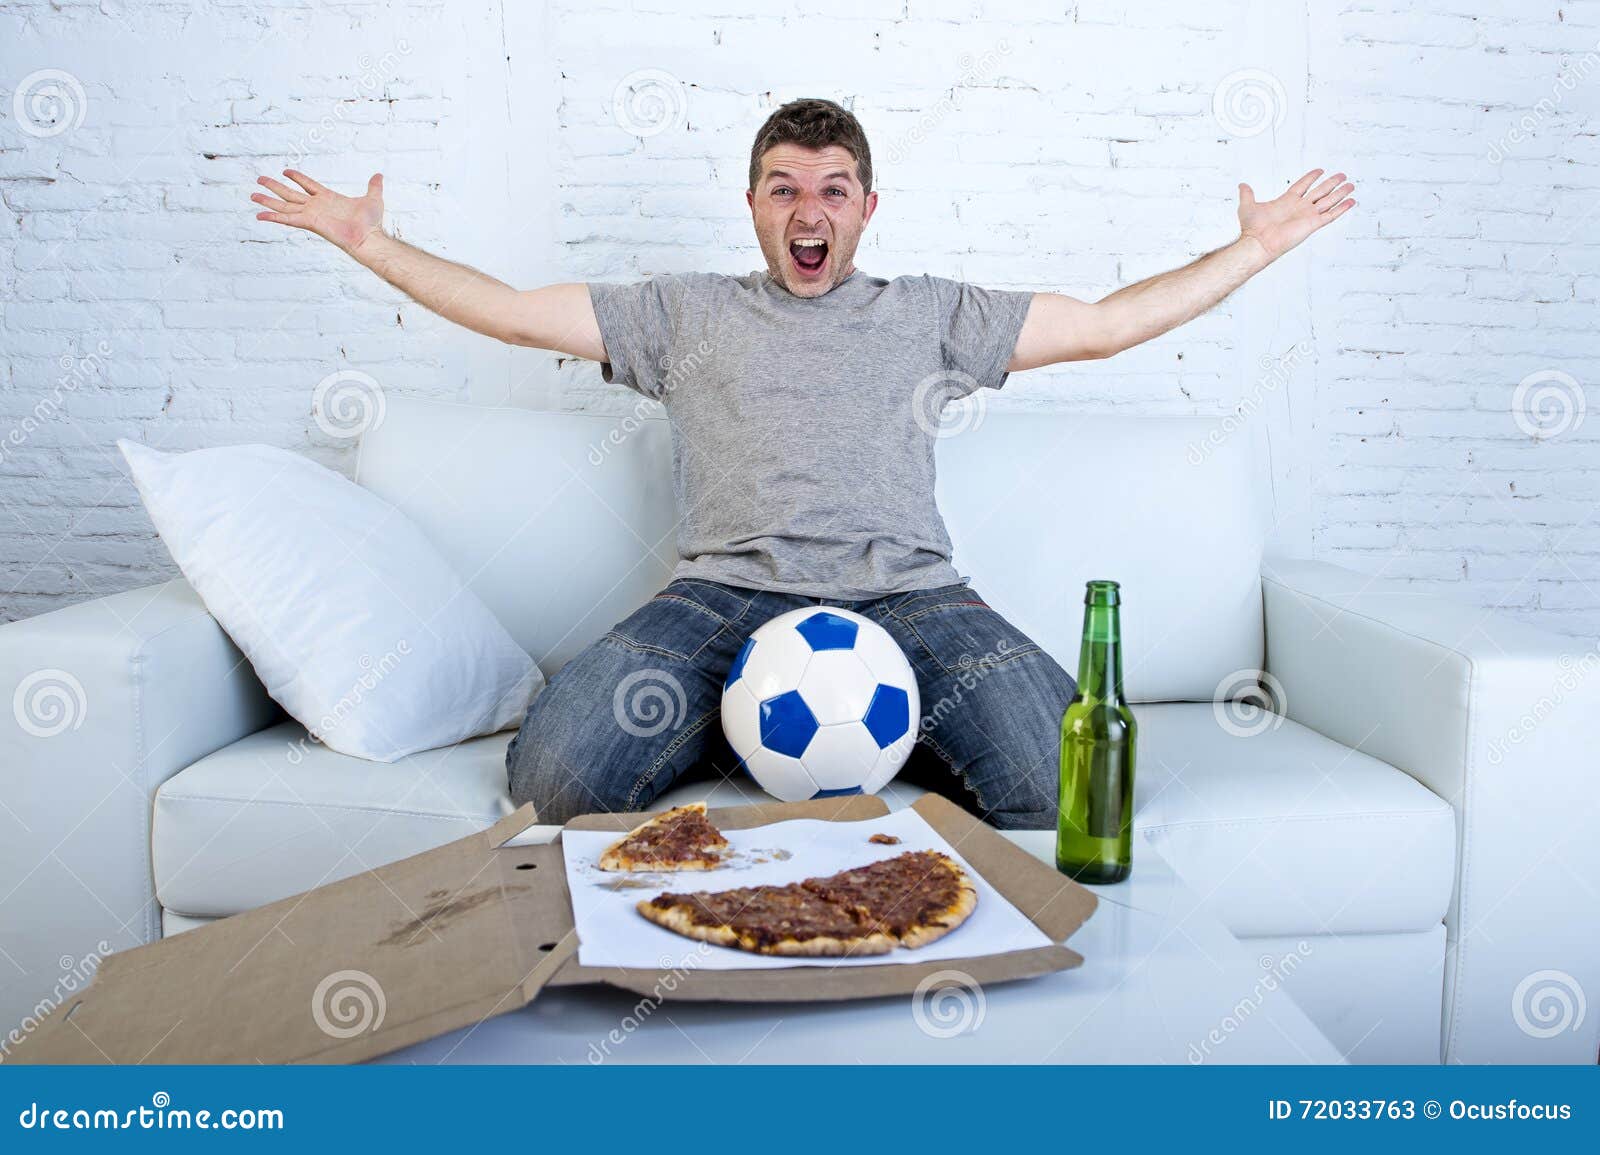 Звезды смотрят футбол. Диван с телевизором с футболом. Диван для просмотра футбола. Картинки мужчина на диване смотрит футбол. Довольный парень на диване смотрит футбол.